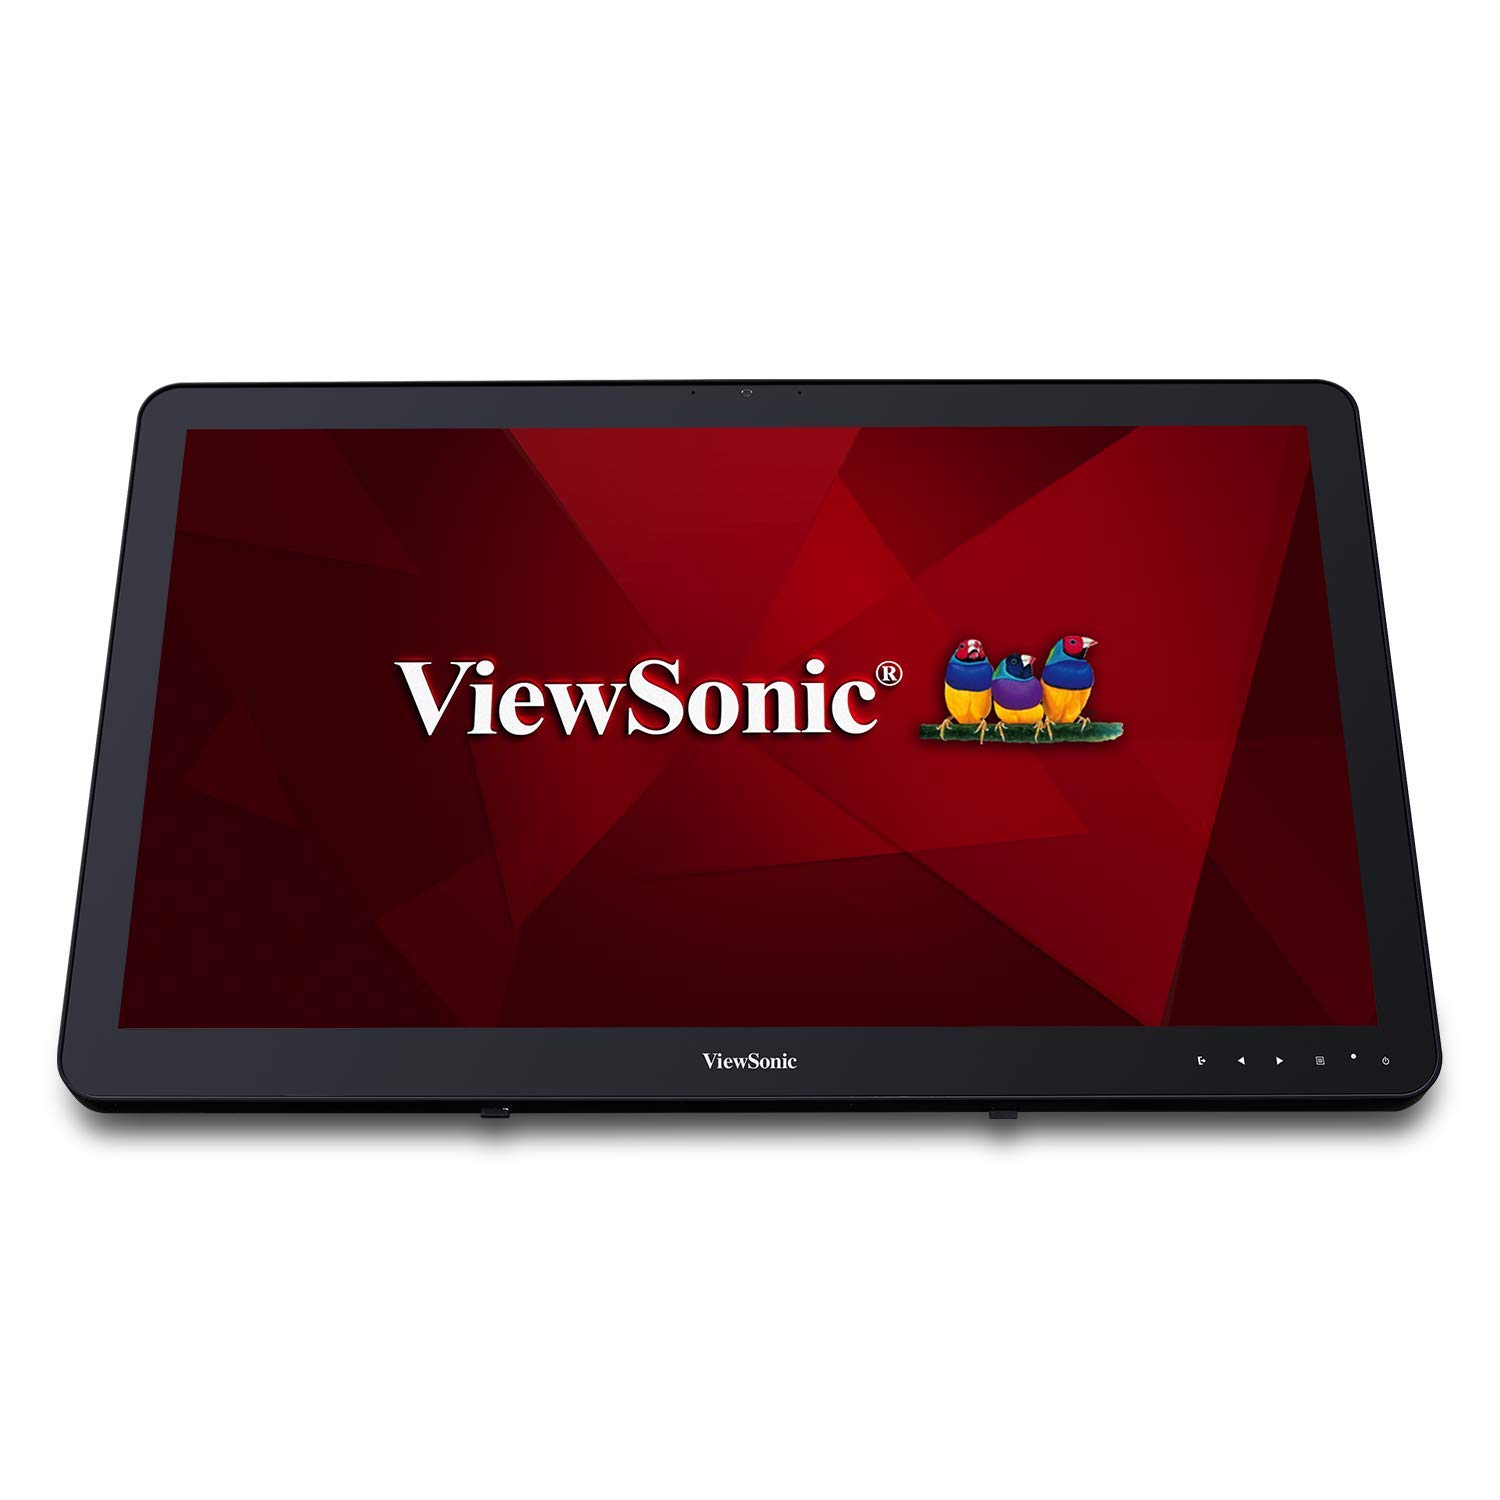 Viewsonic VSD243-BKA-US0 24 英寸 1080p 10 点触摸智能数字显示屏，带蓝牙双频 Wi-Fi 和 Android Oreo 8.1 操作系统